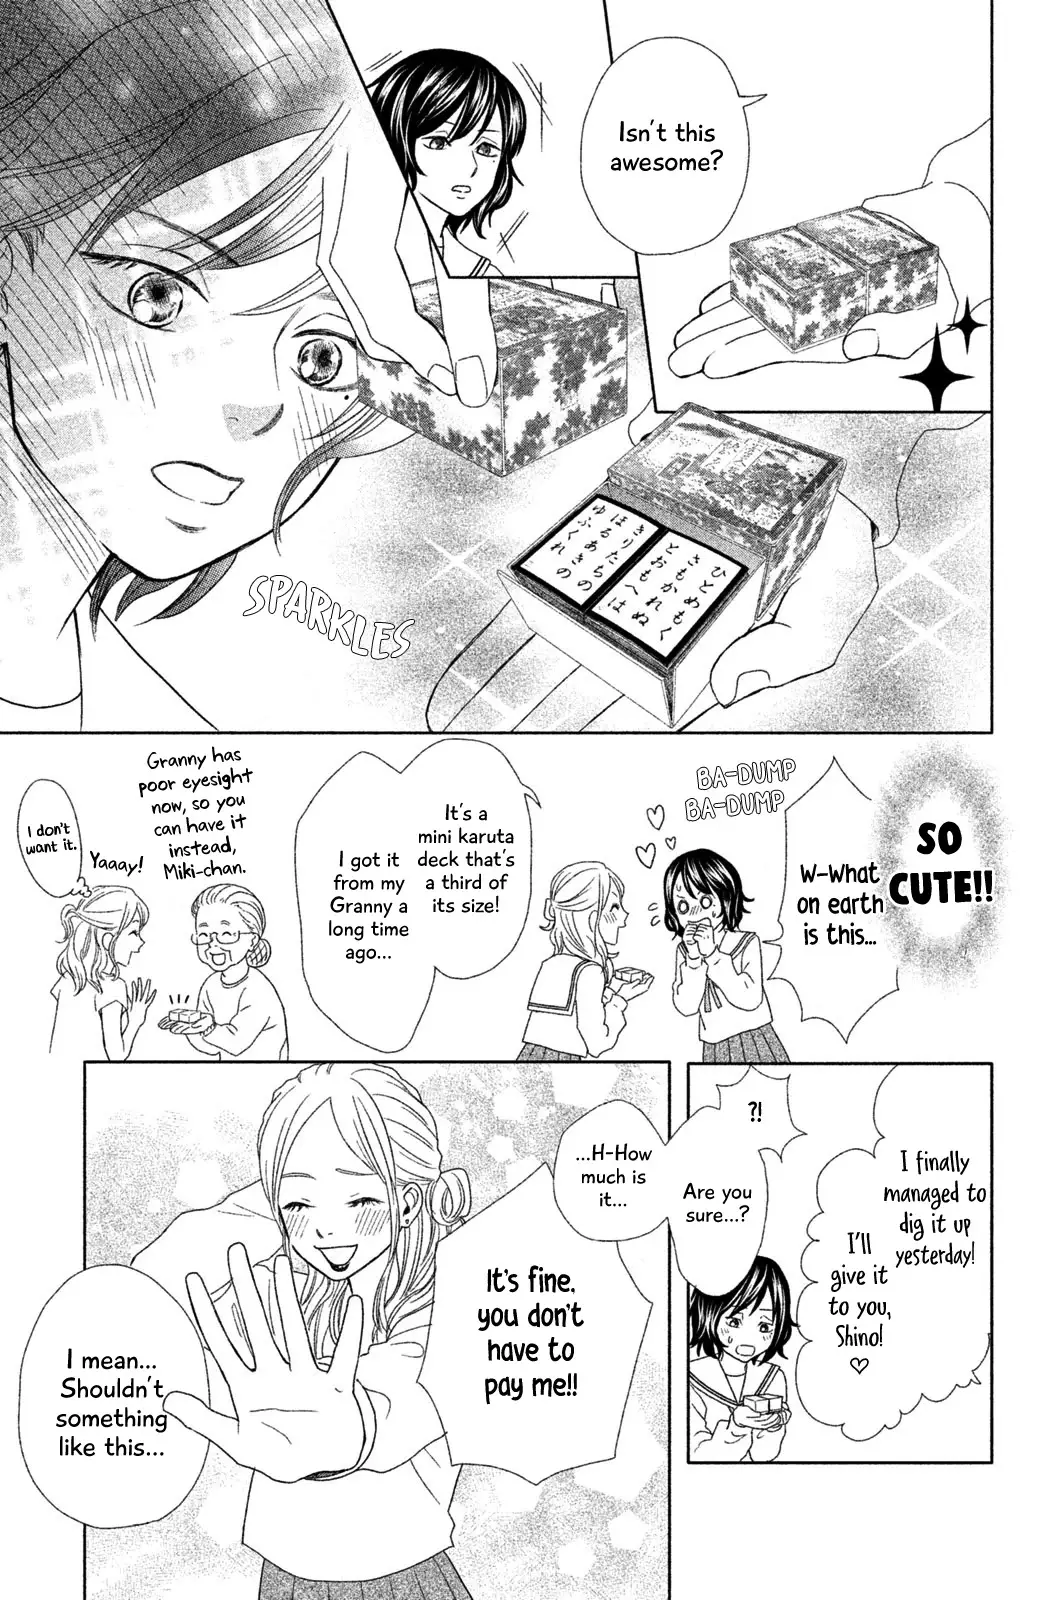 Chihayafuru: Middle School Arc - 11 page 8